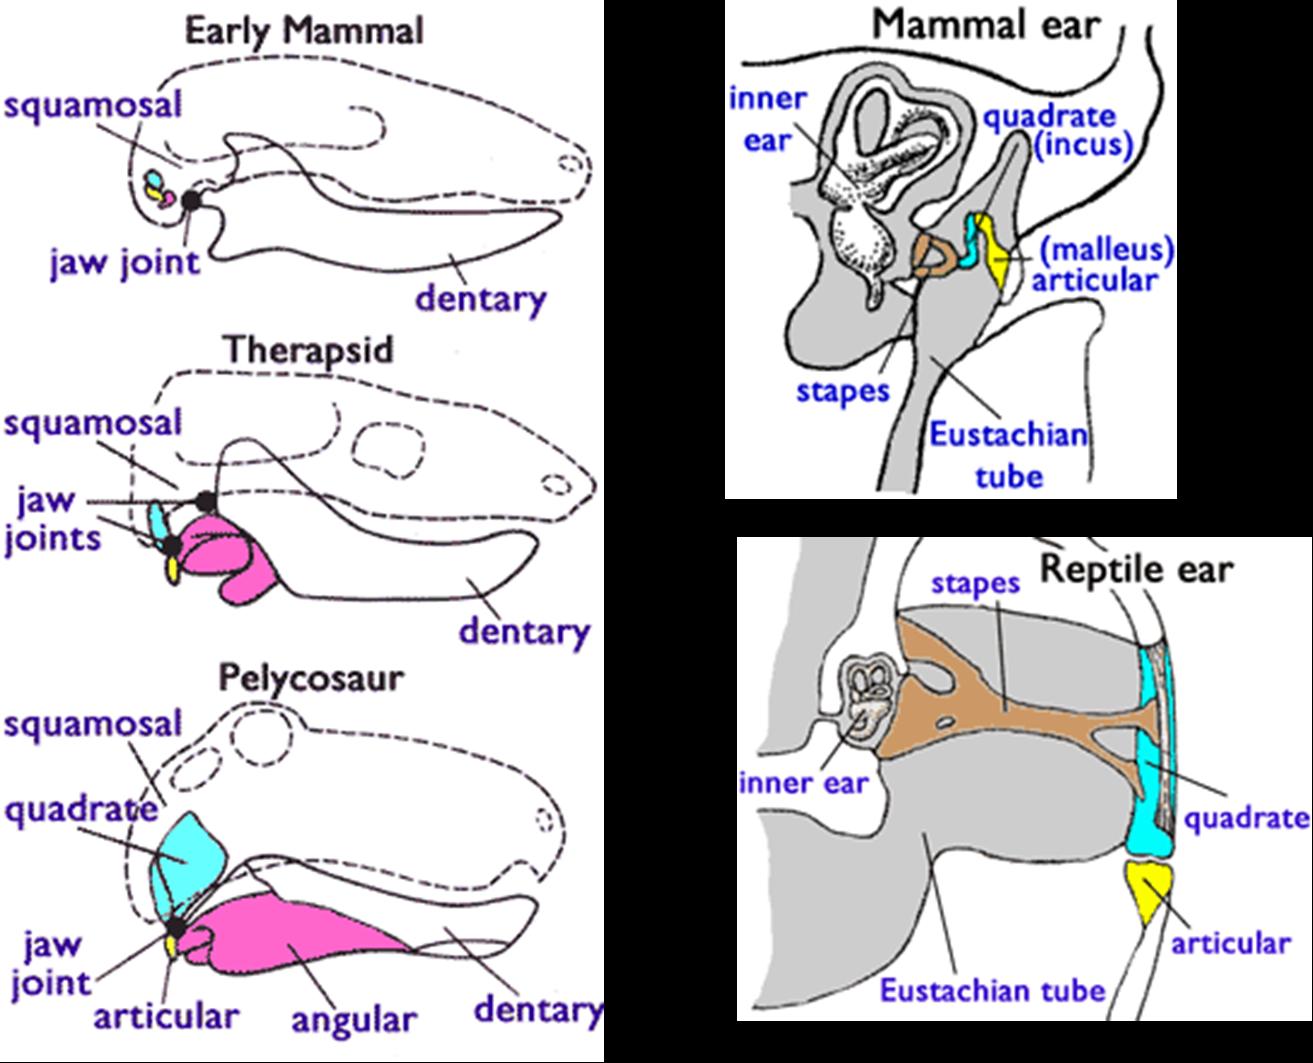 reptile-jaw-mammal-ear-comparison.jpg